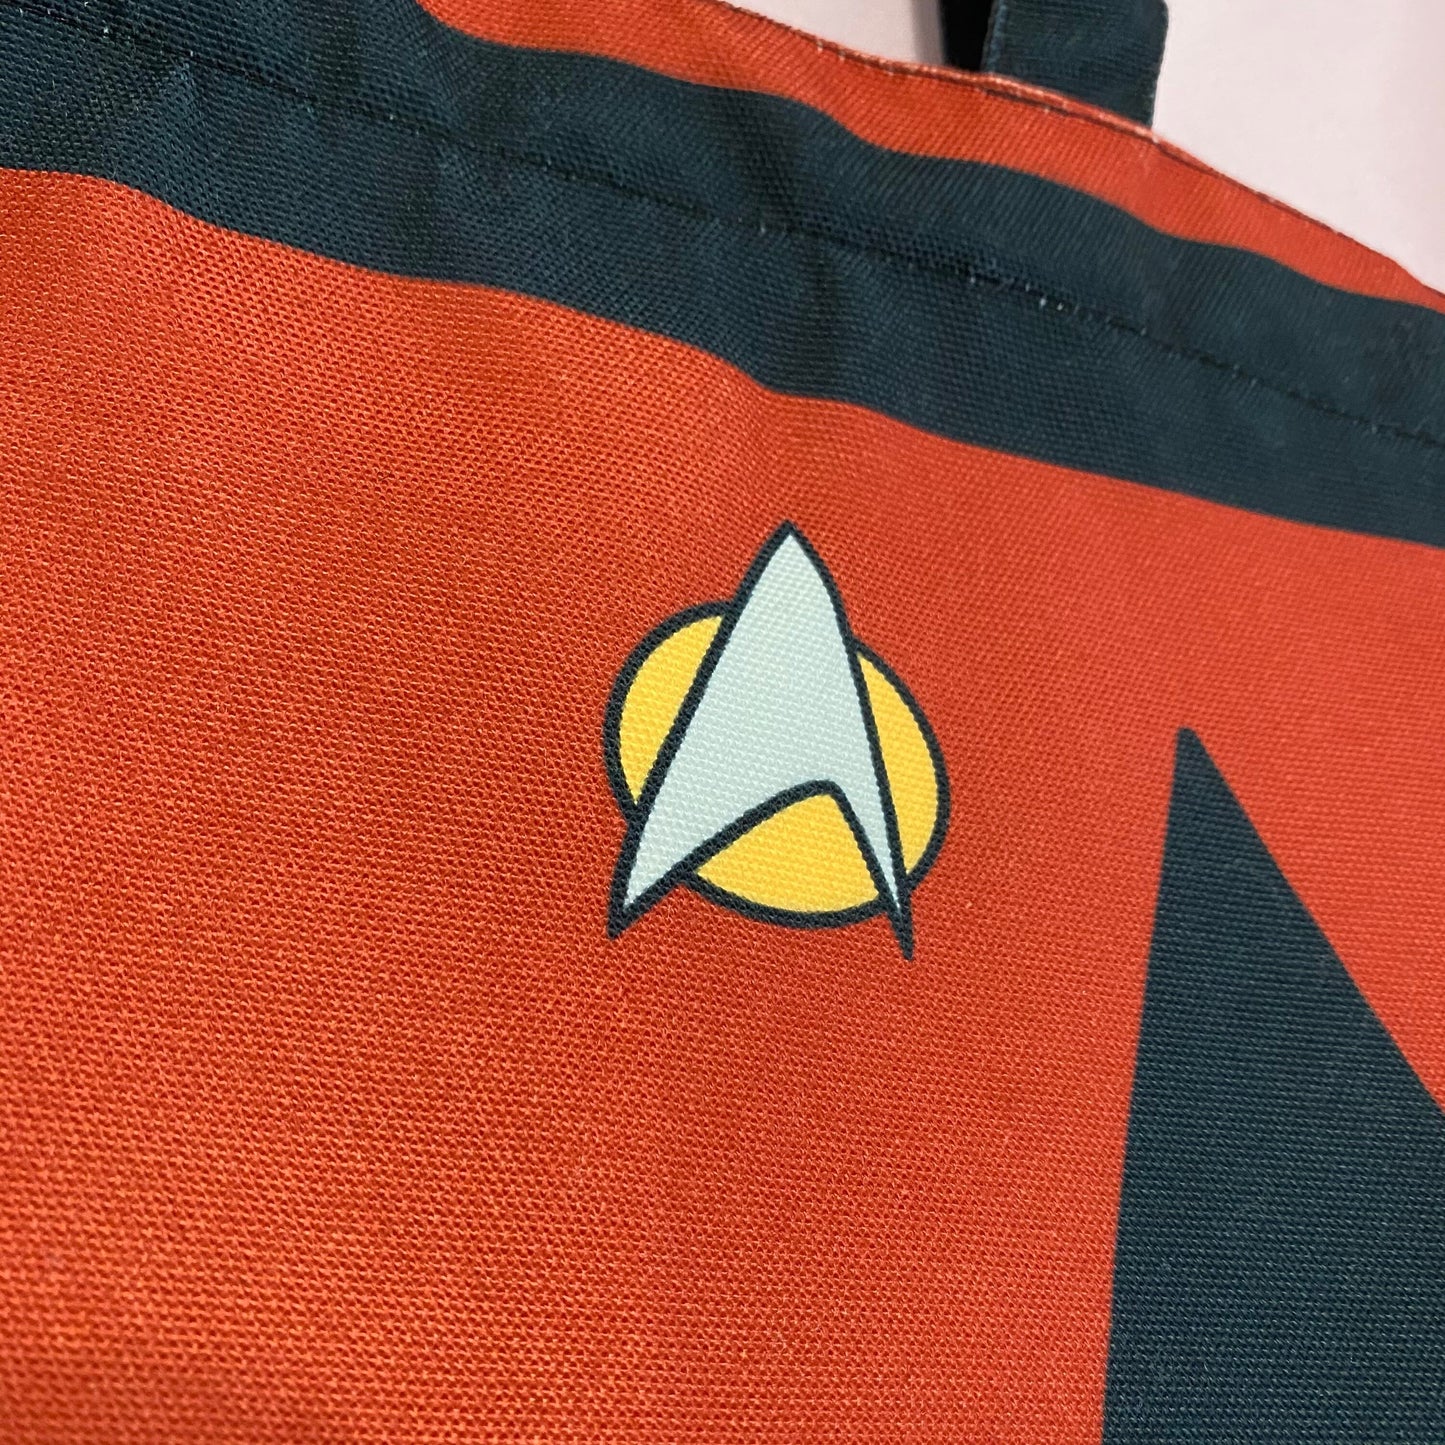 Star Trek TNG Command Uniform Captain Picard Inspired Tote Bag